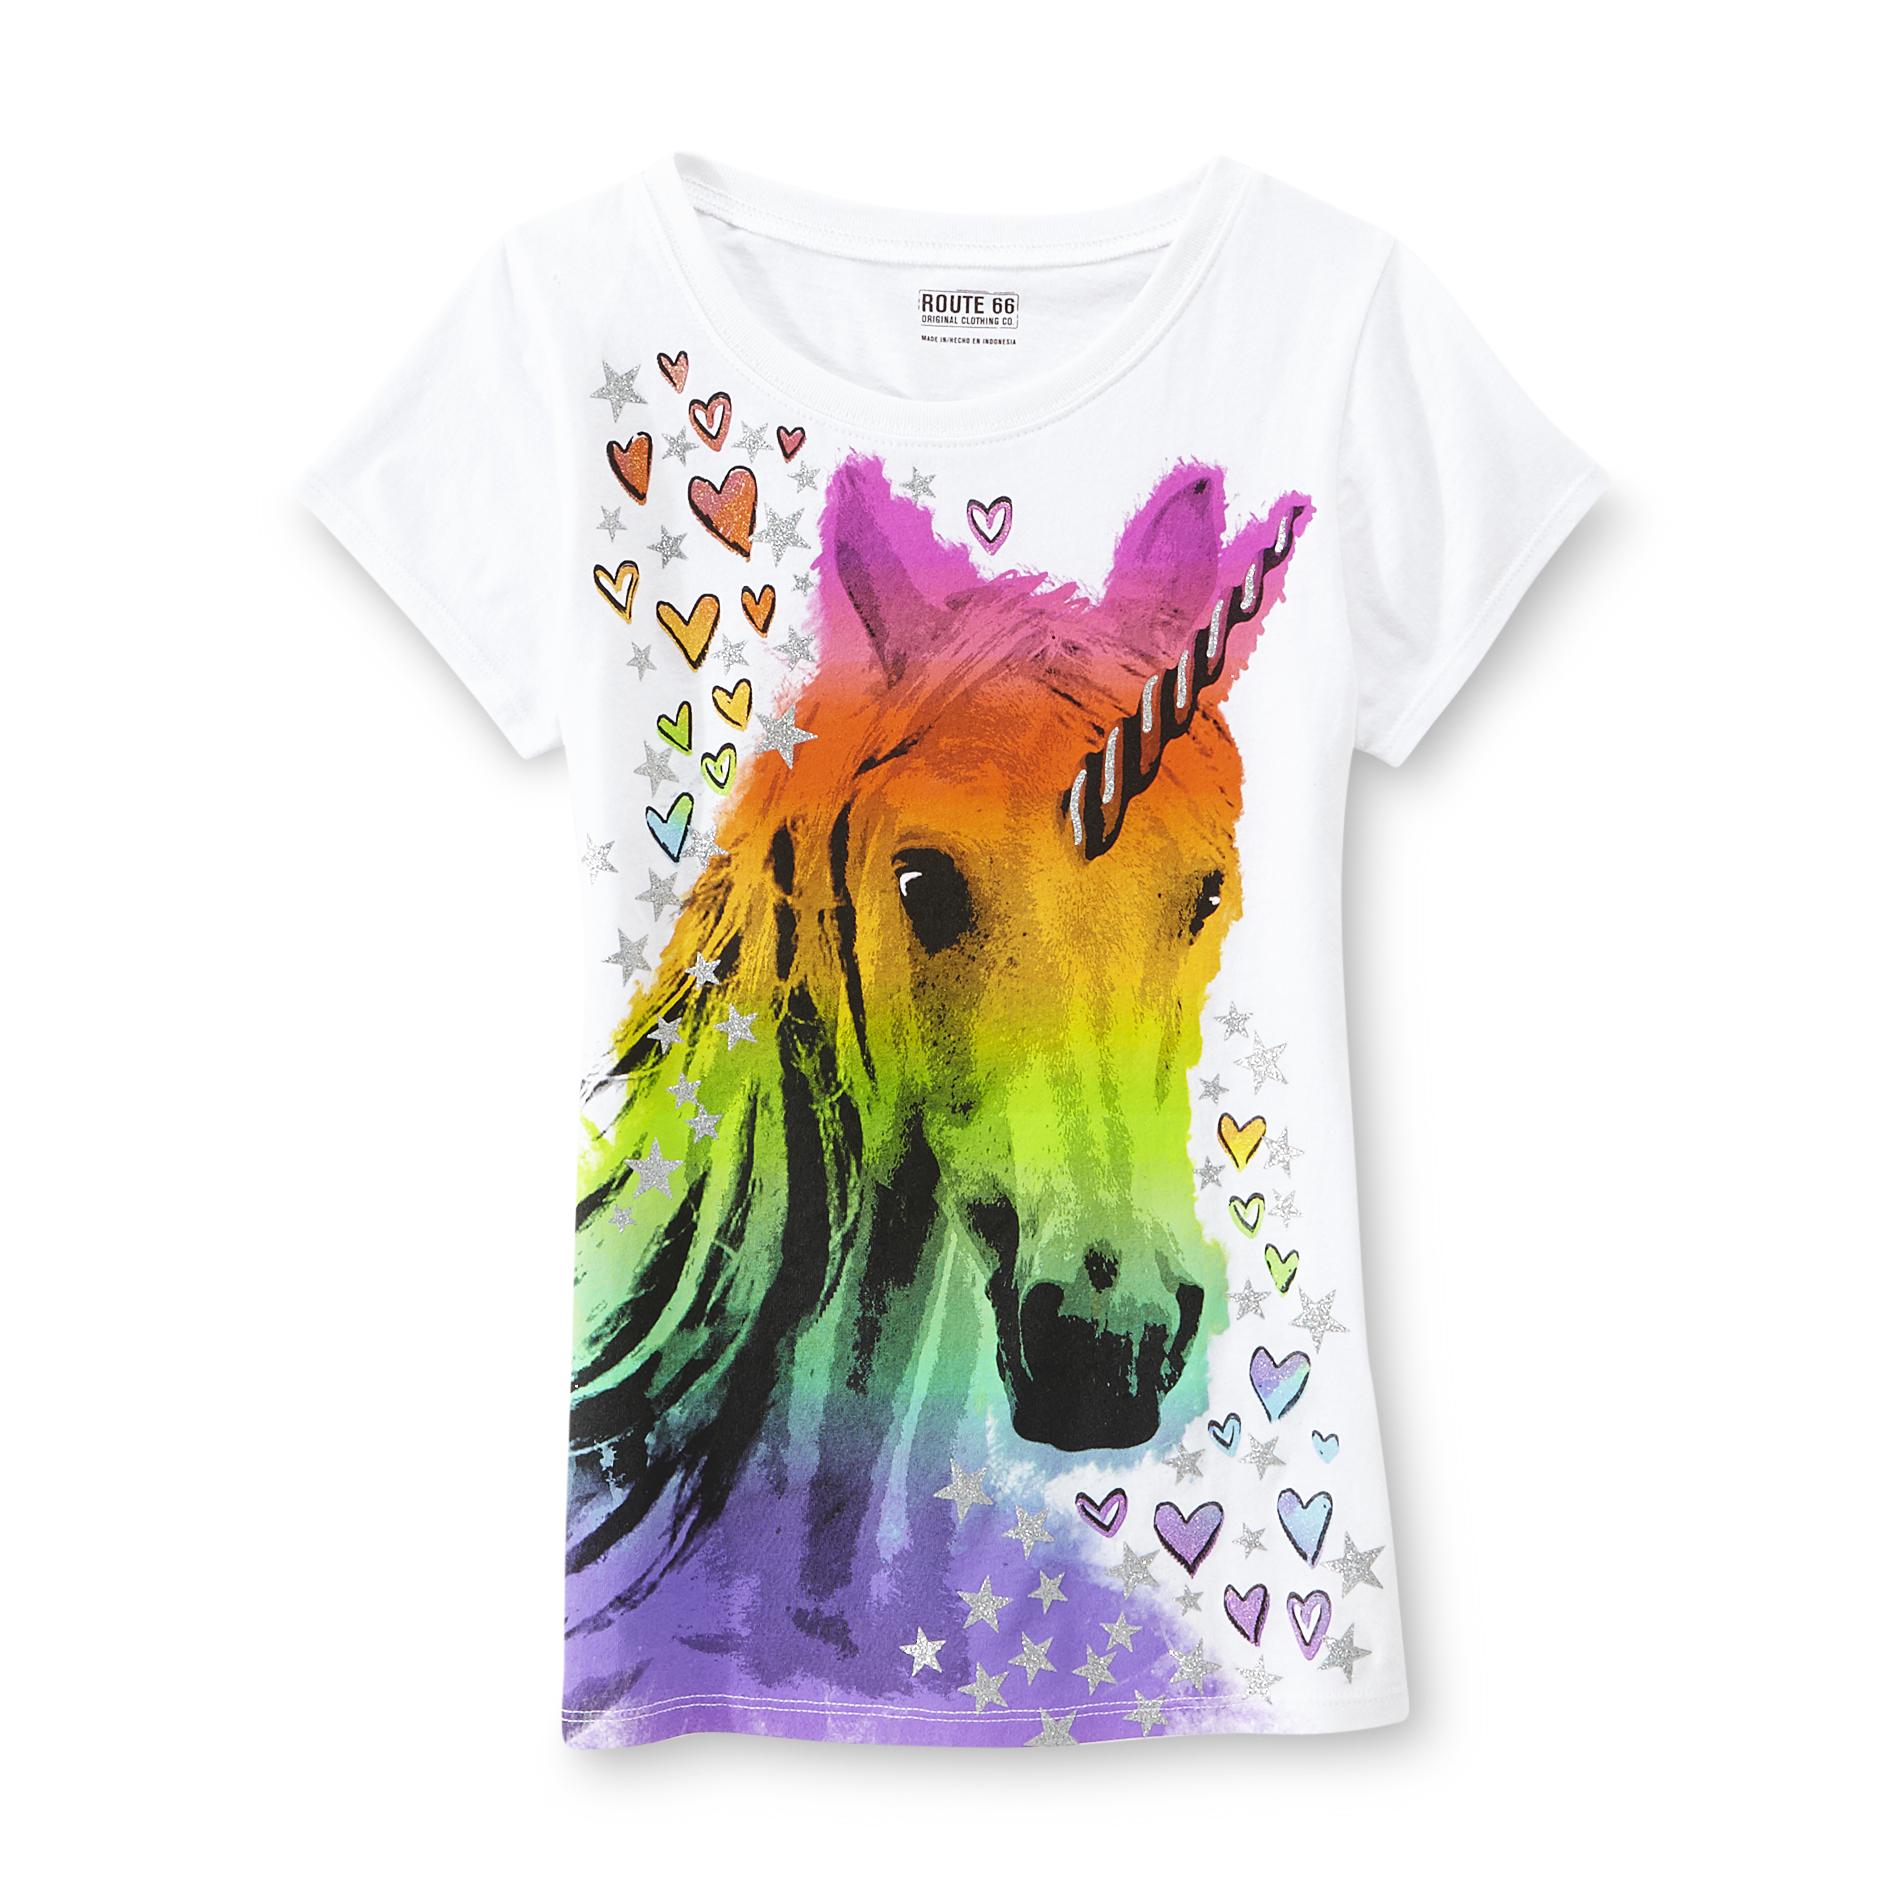 Route 66 Girl's Graphic T-Shirt - Unicorn